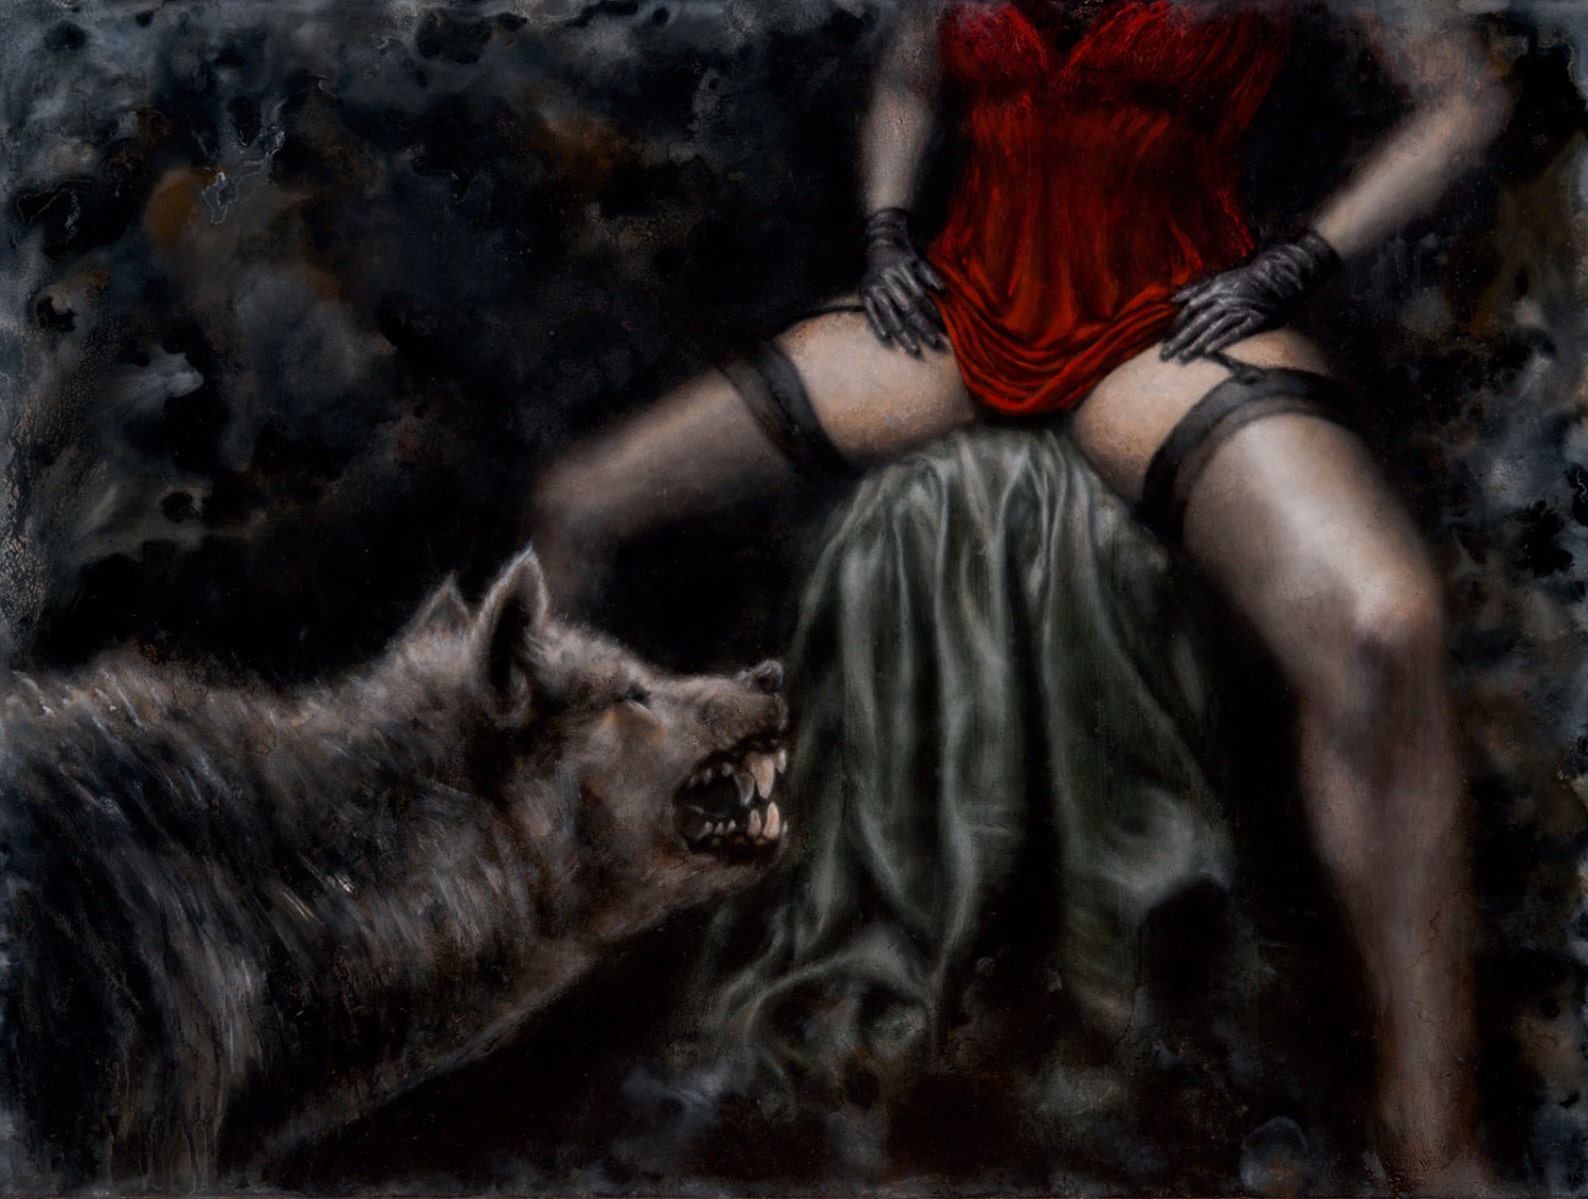 Wolf Little Red Riding Hood Lust Devour Original Oil image 0.